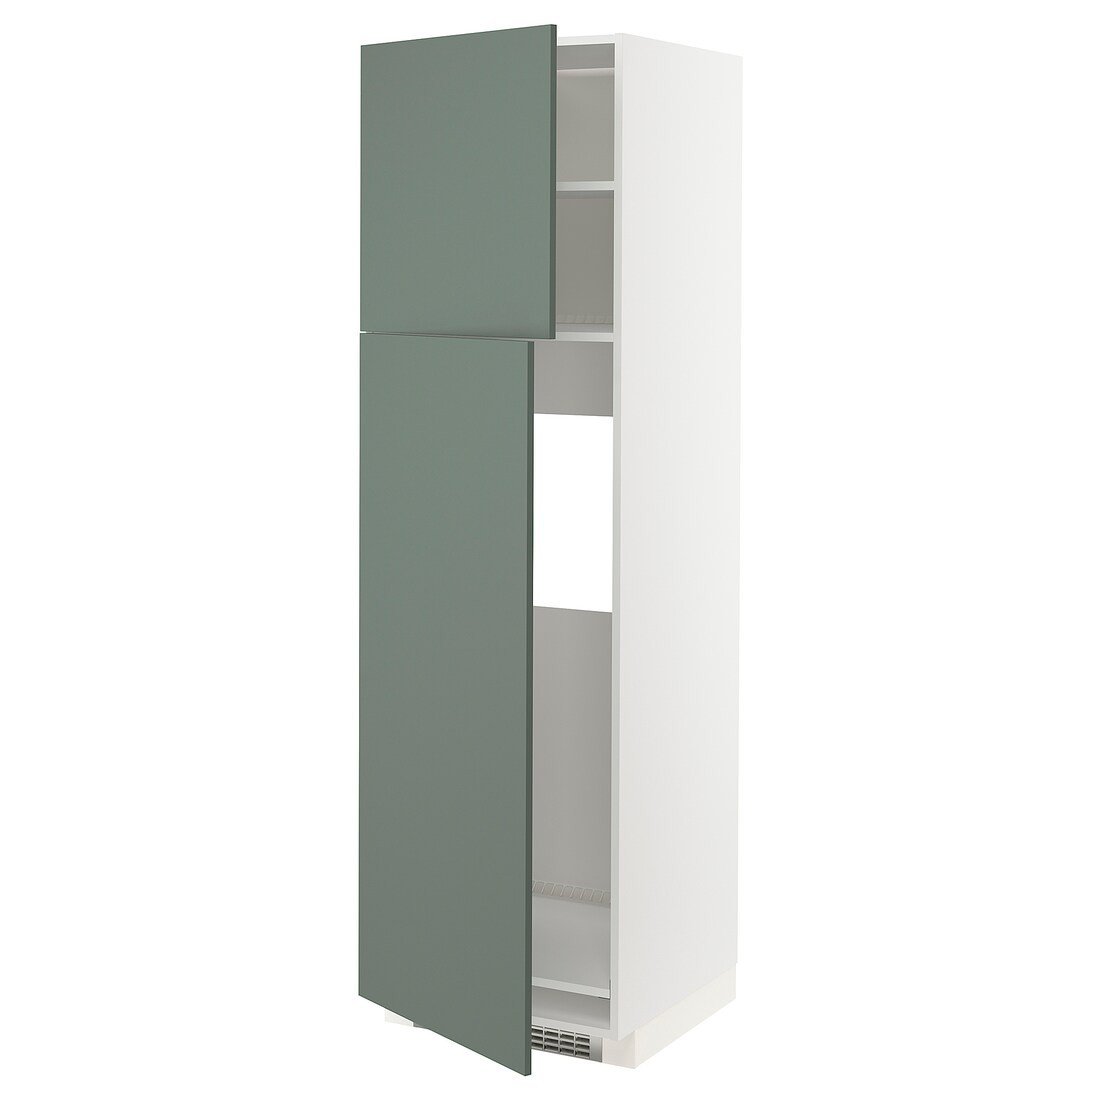 METOD МЕТОД Высокий шкаф для холодильника, белый / Bodarp серо-зеленый, 60x60x200 см